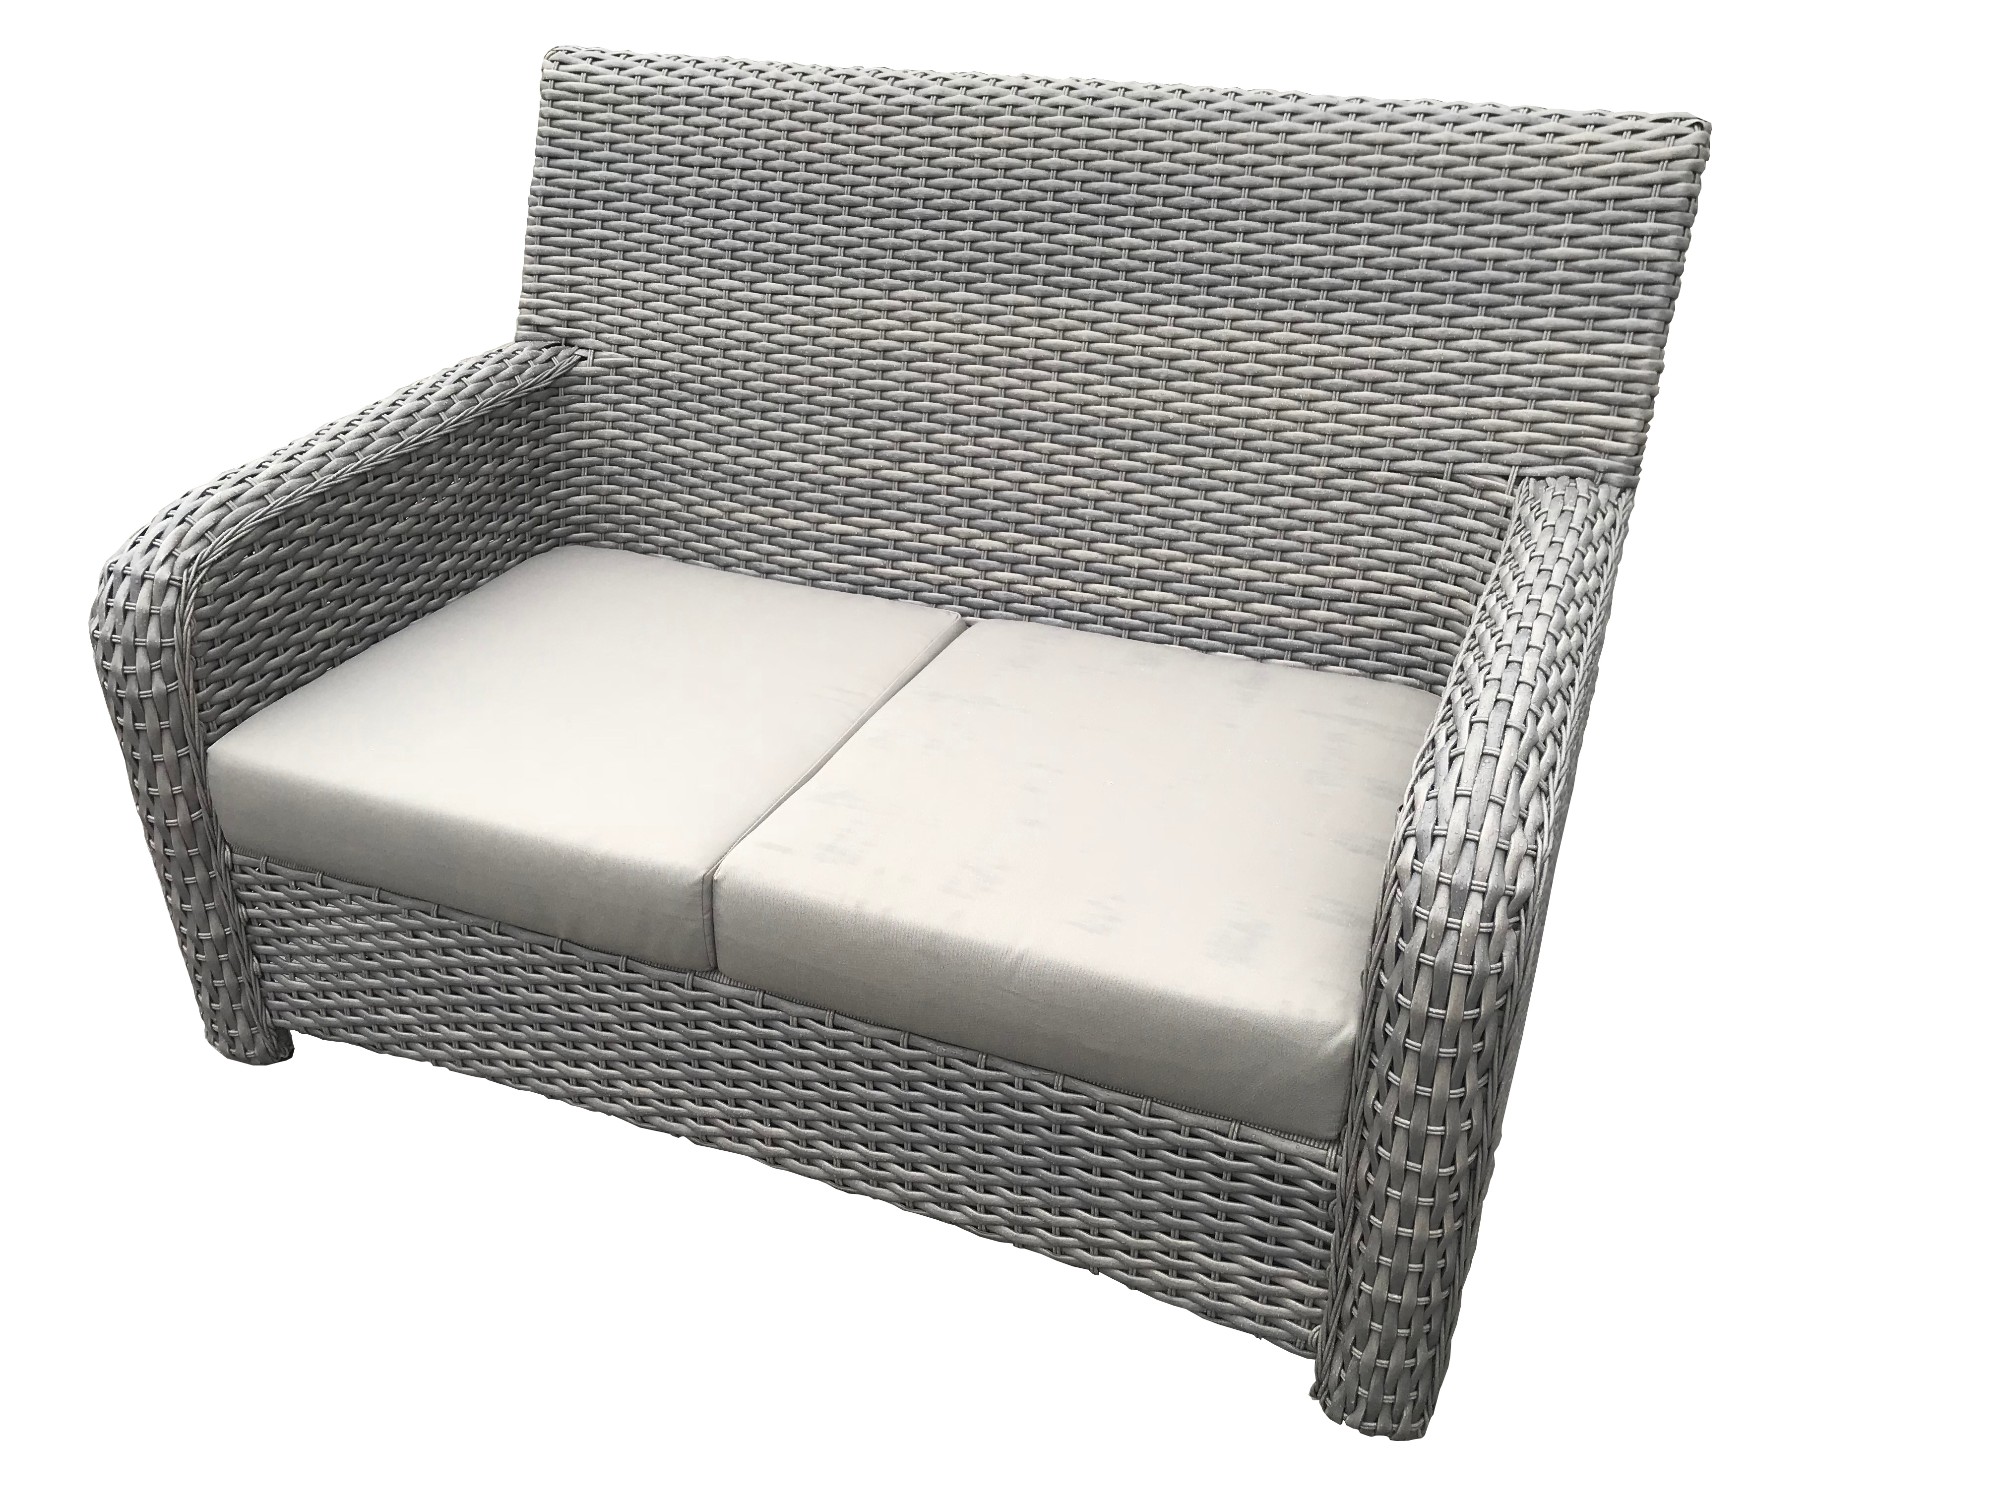 Discount Wicker Furniture Garden Sofa